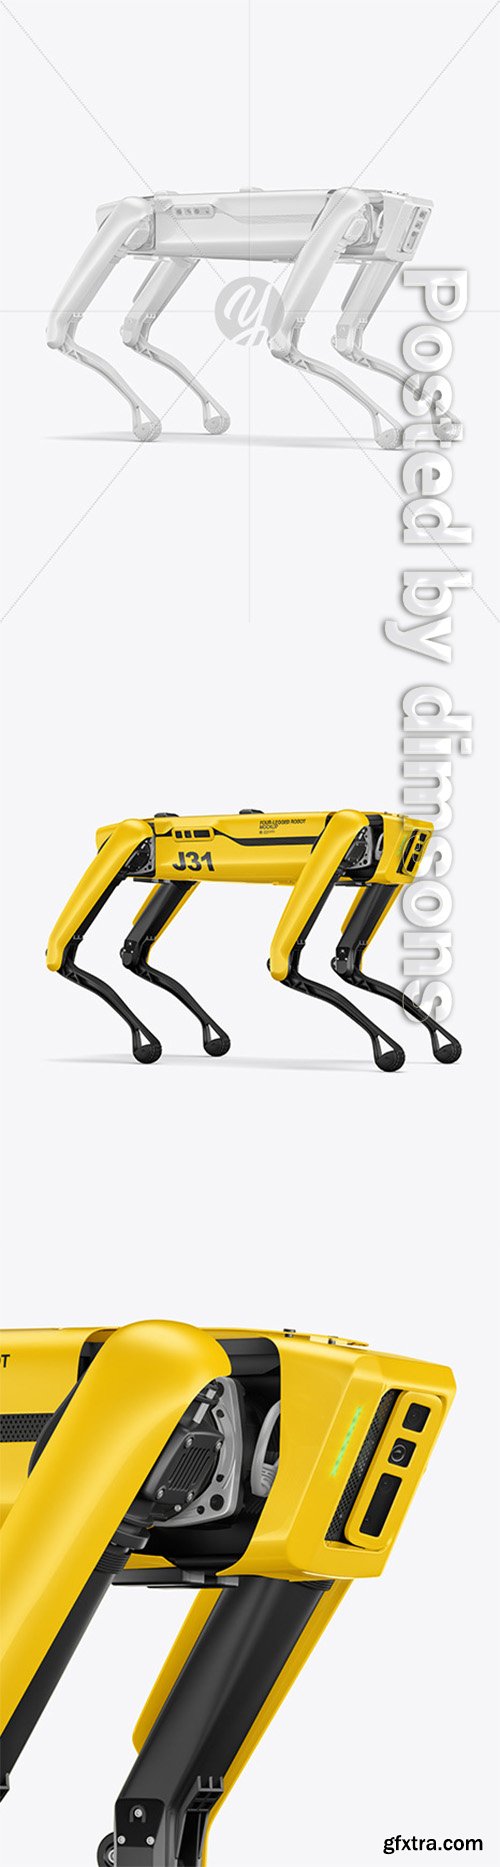 Four-Legged Robot Mockup 66077